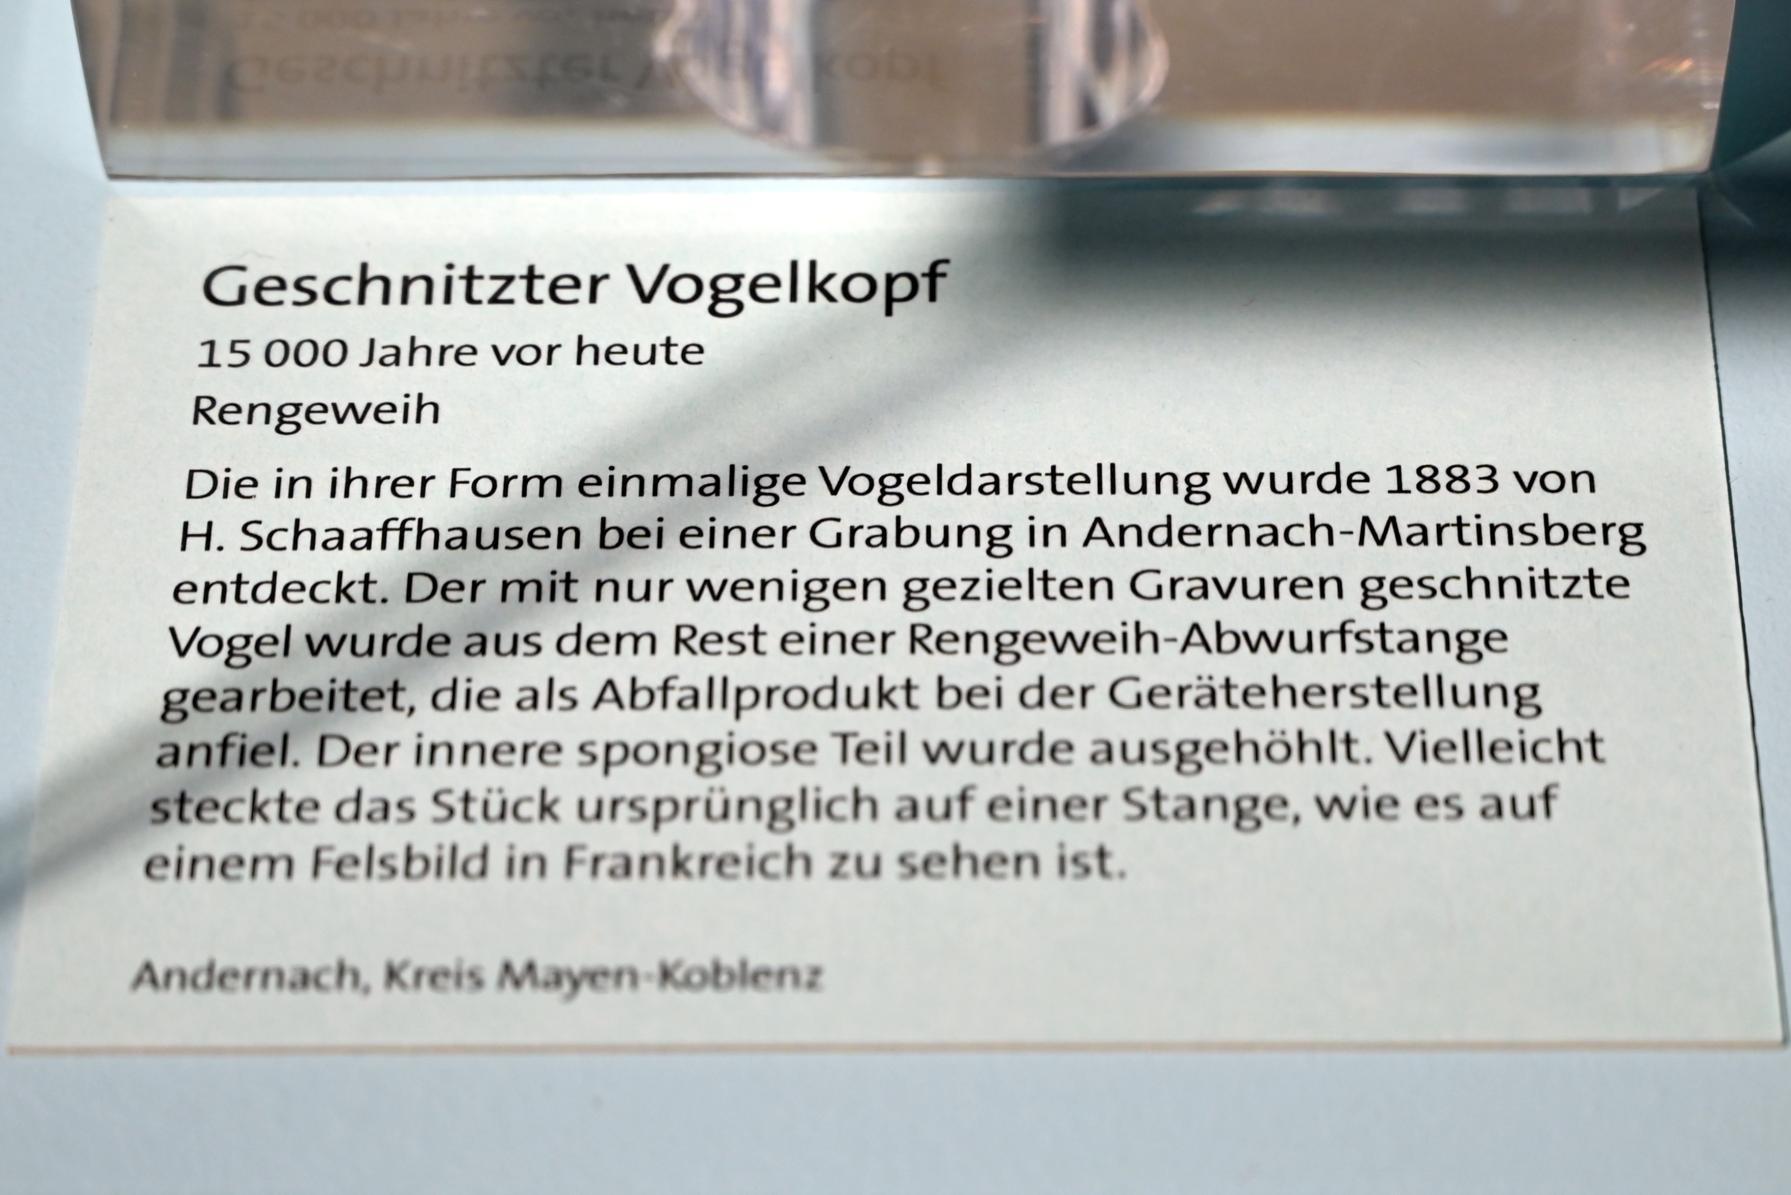 Geschnitzter Vogelkopf, 13000 v. Chr., Bild 4/4